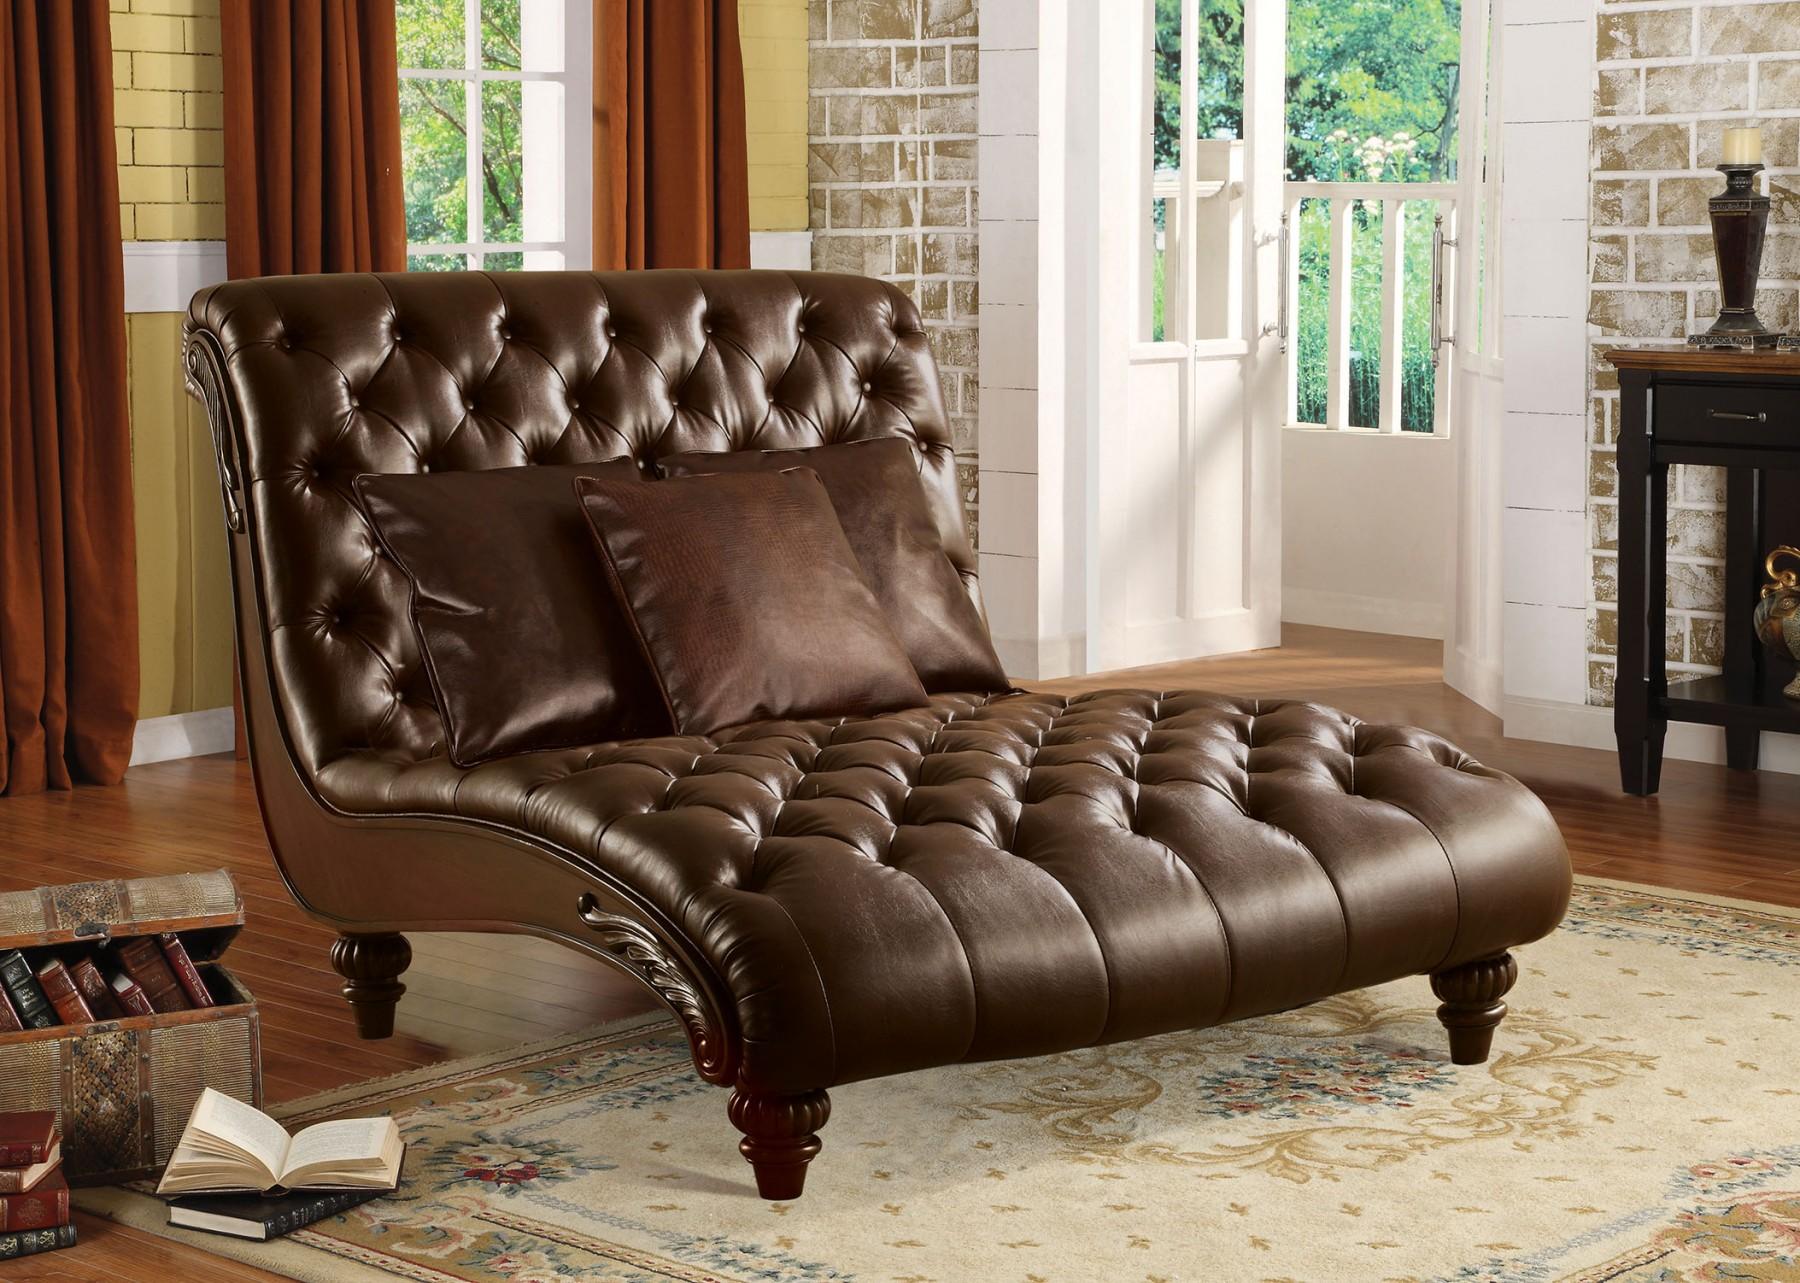 Classic, Traditional Sofa Chaise Anondale  15035 Anondale 15035 in Dark Chocolate, Espresso Polyurethane